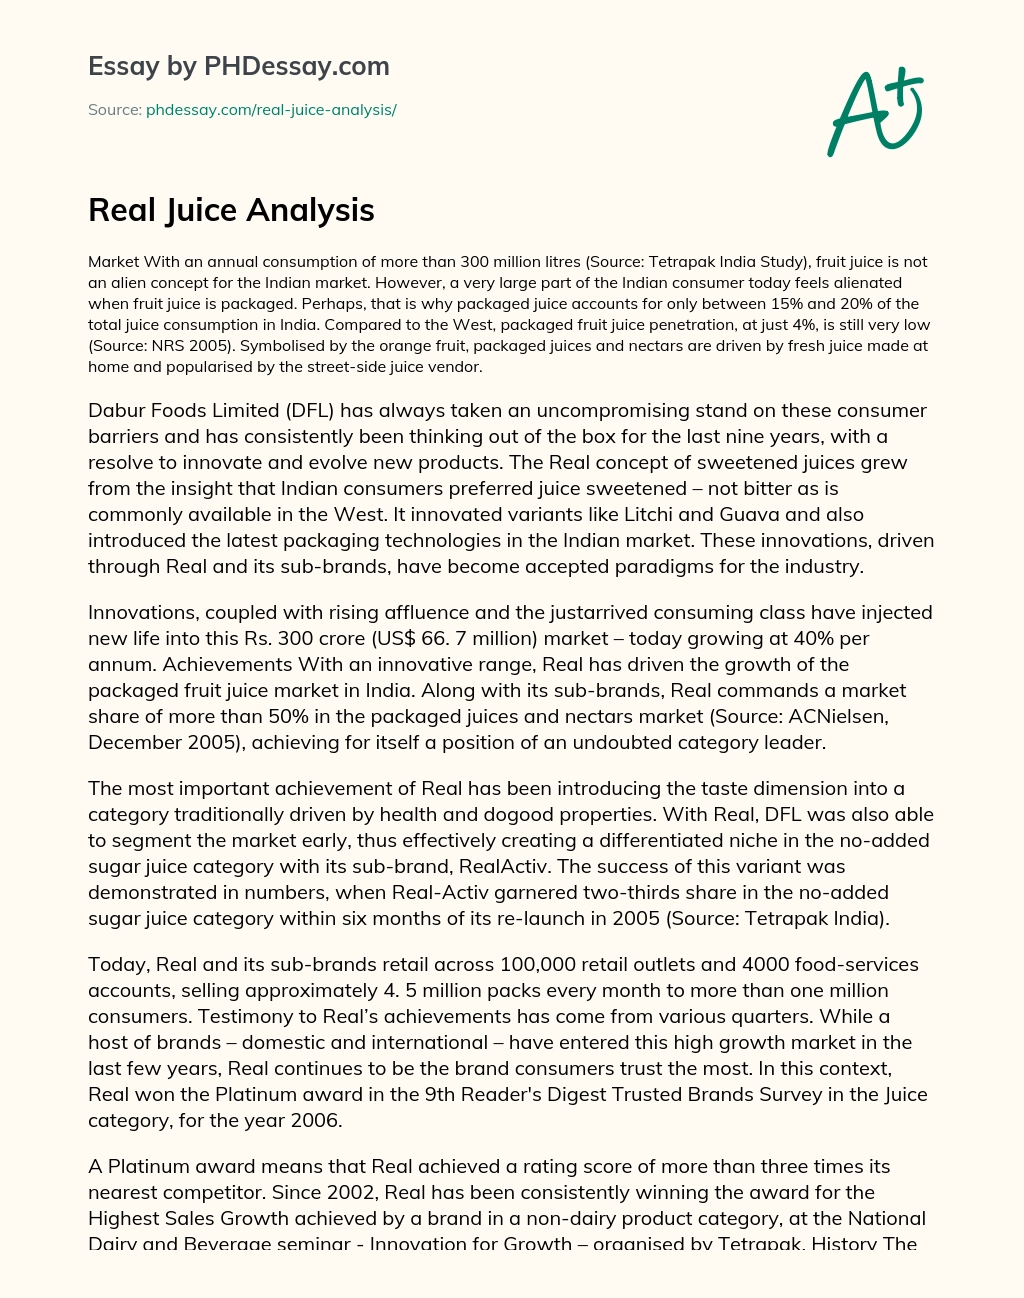 Real Juice Analysis essay